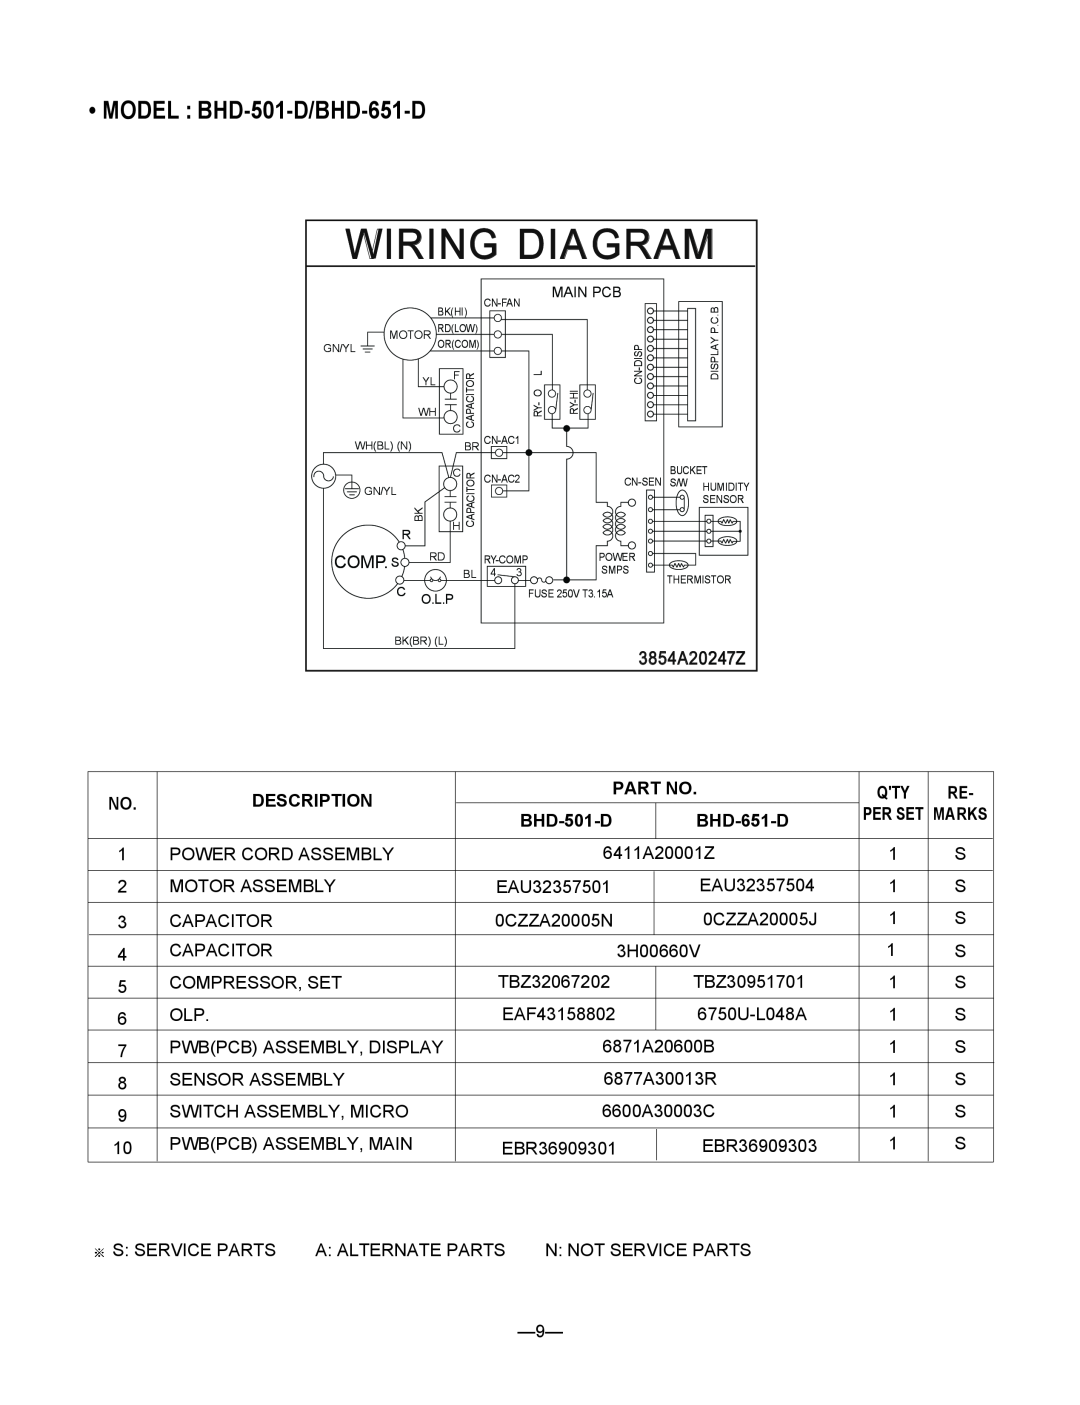 Heat Controller BHD-301-D service manual MODEL BHD-501-D/BHD-651-D, Wiring Diagram, Description 